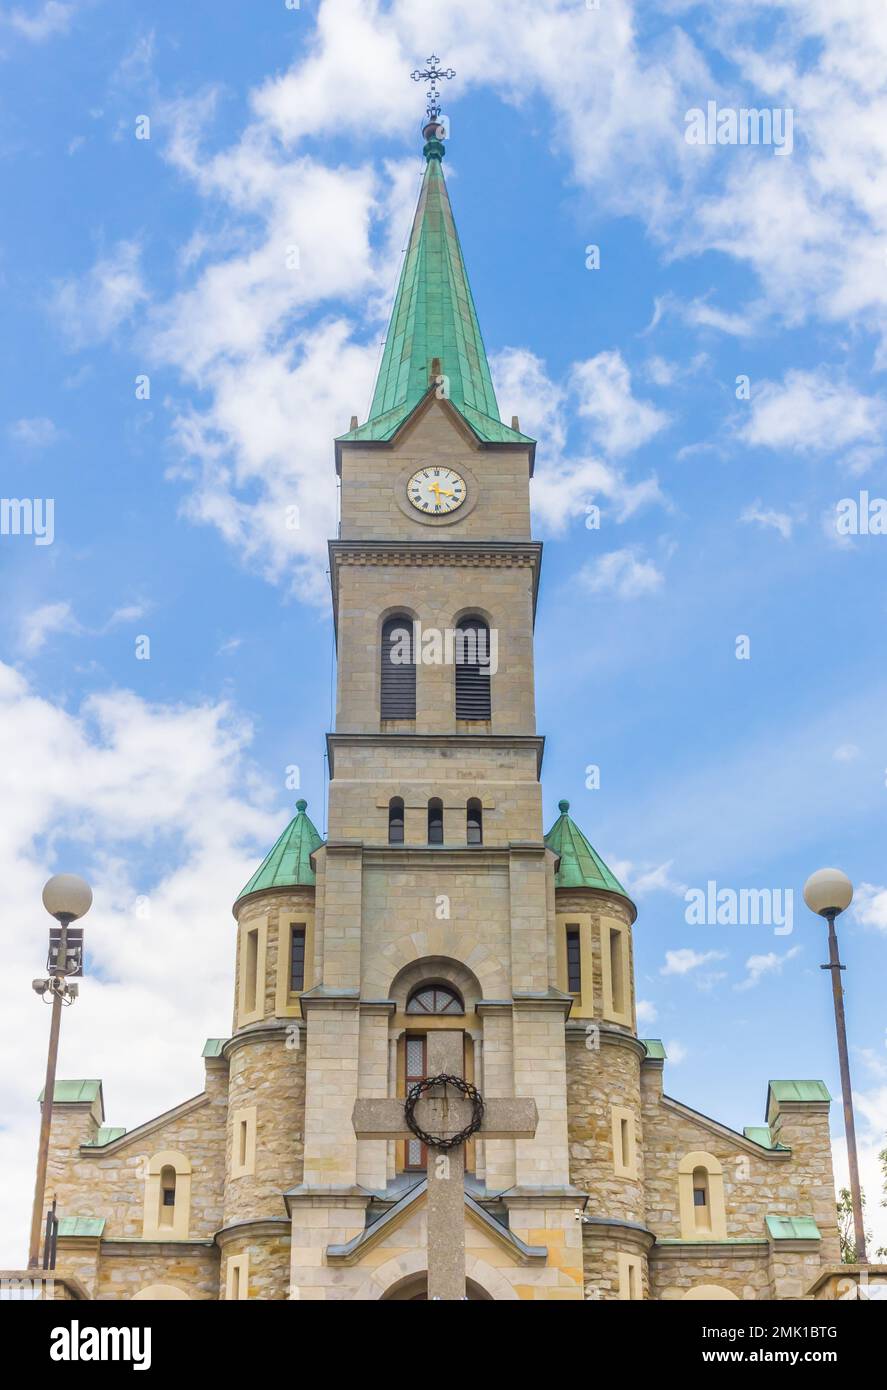 Tower of the Holy Family Church in Zakopane, Poland Stock Photo